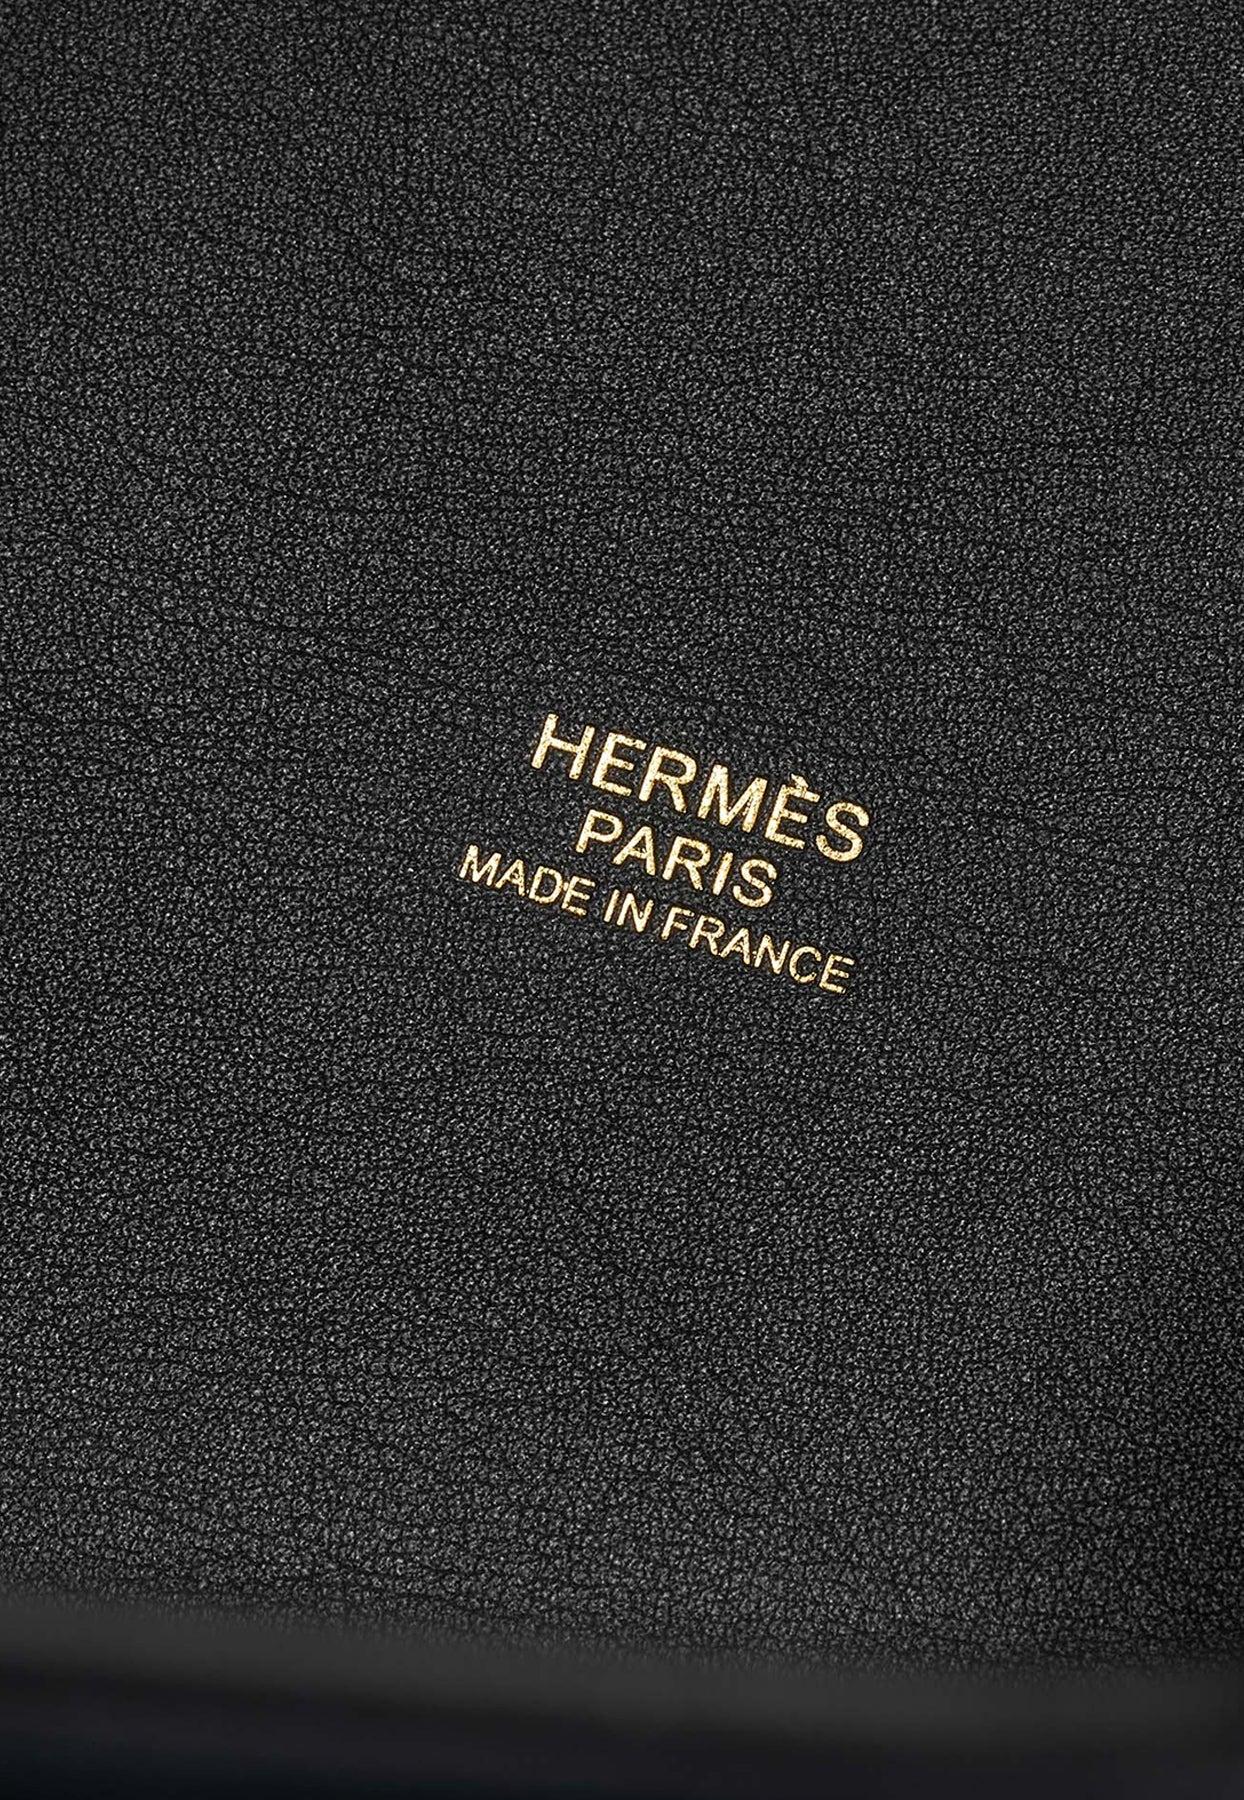 Picotin 18 Gold on Gold. 😁 Beautiful Wednesday everyone!! #hermes  #hermesbag #hermesorangebox #hermessandals #hermesbelt #hermescontance …